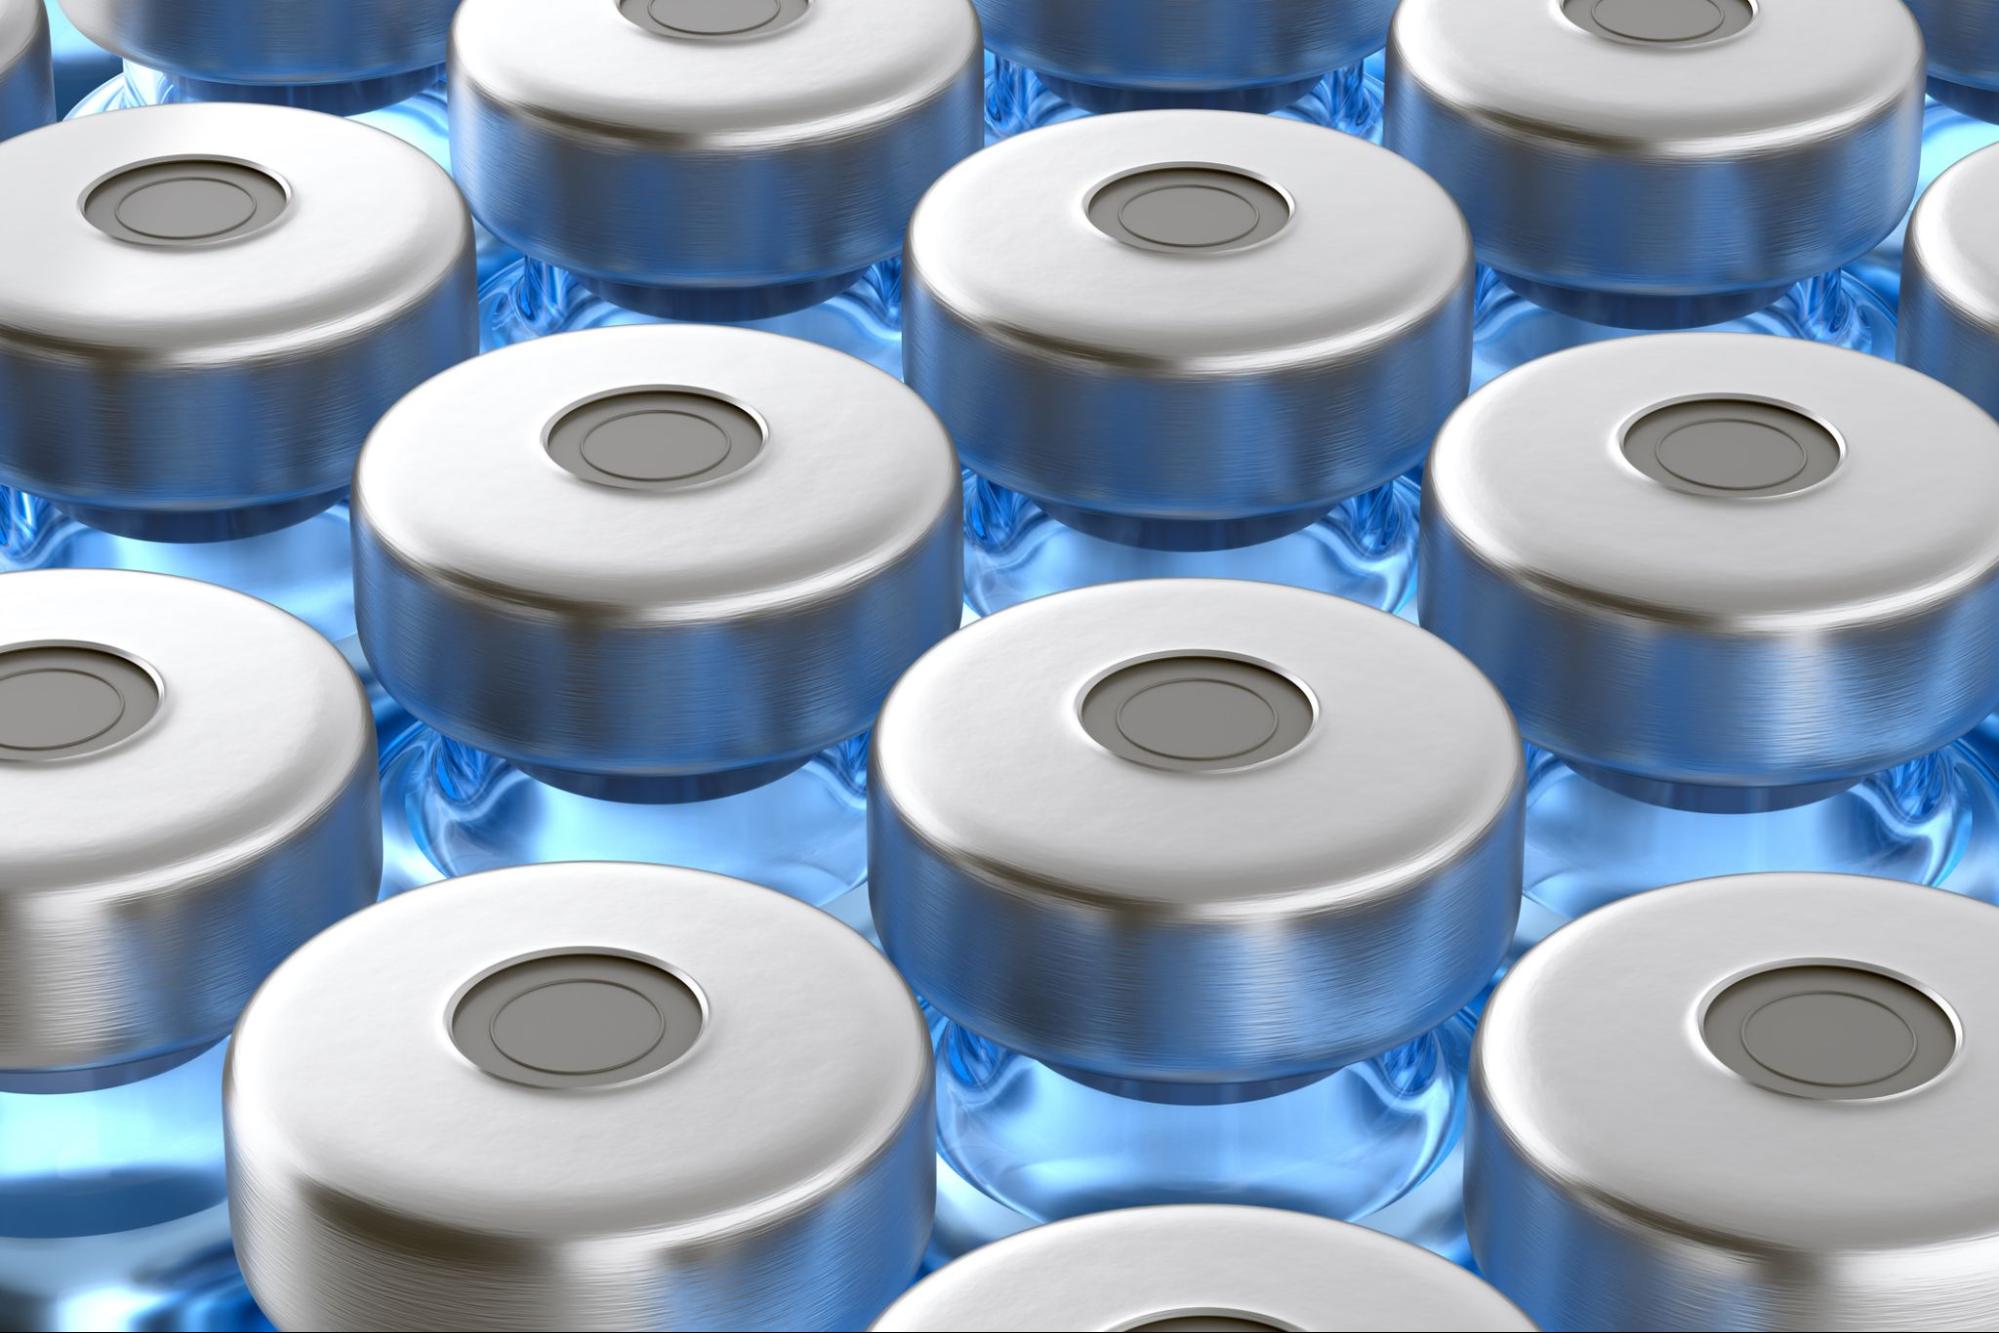 Injection vaccine in blue glass pharmacy vial bottles